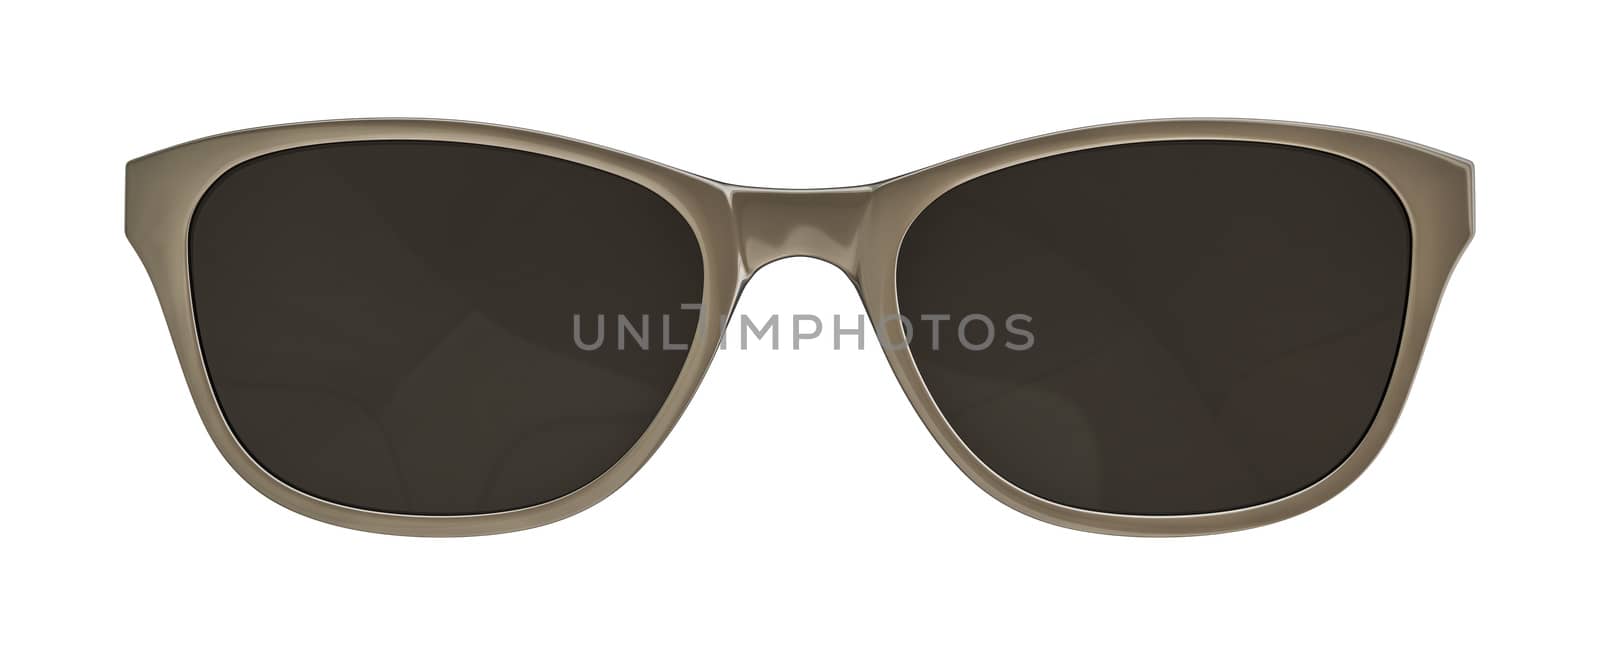 3d illustration of sunglasses on white background